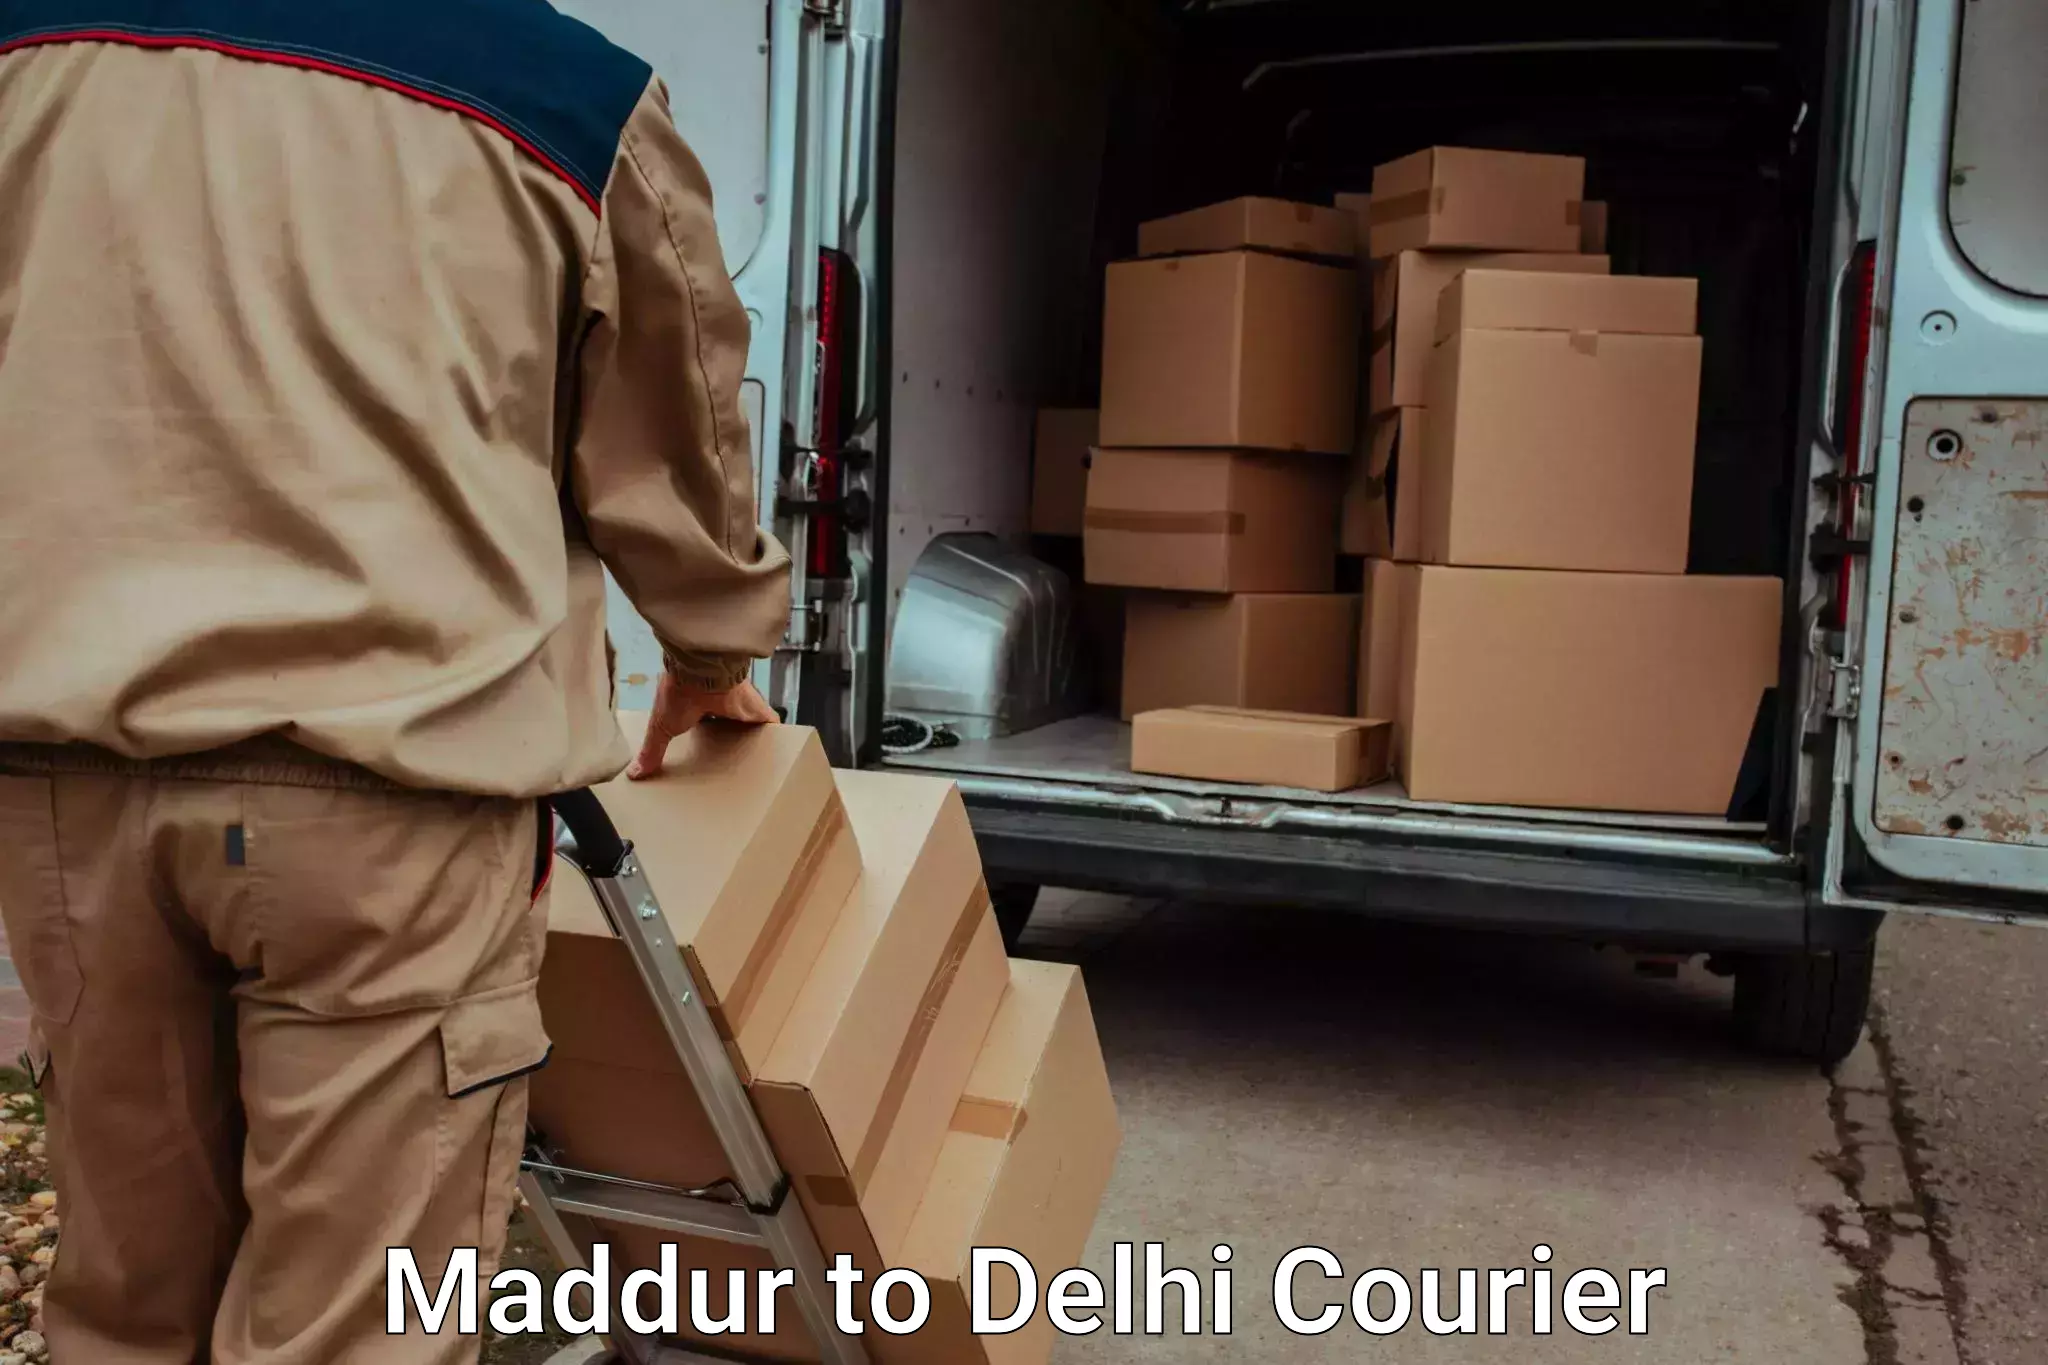 Instant baggage transport quote Maddur to Delhi